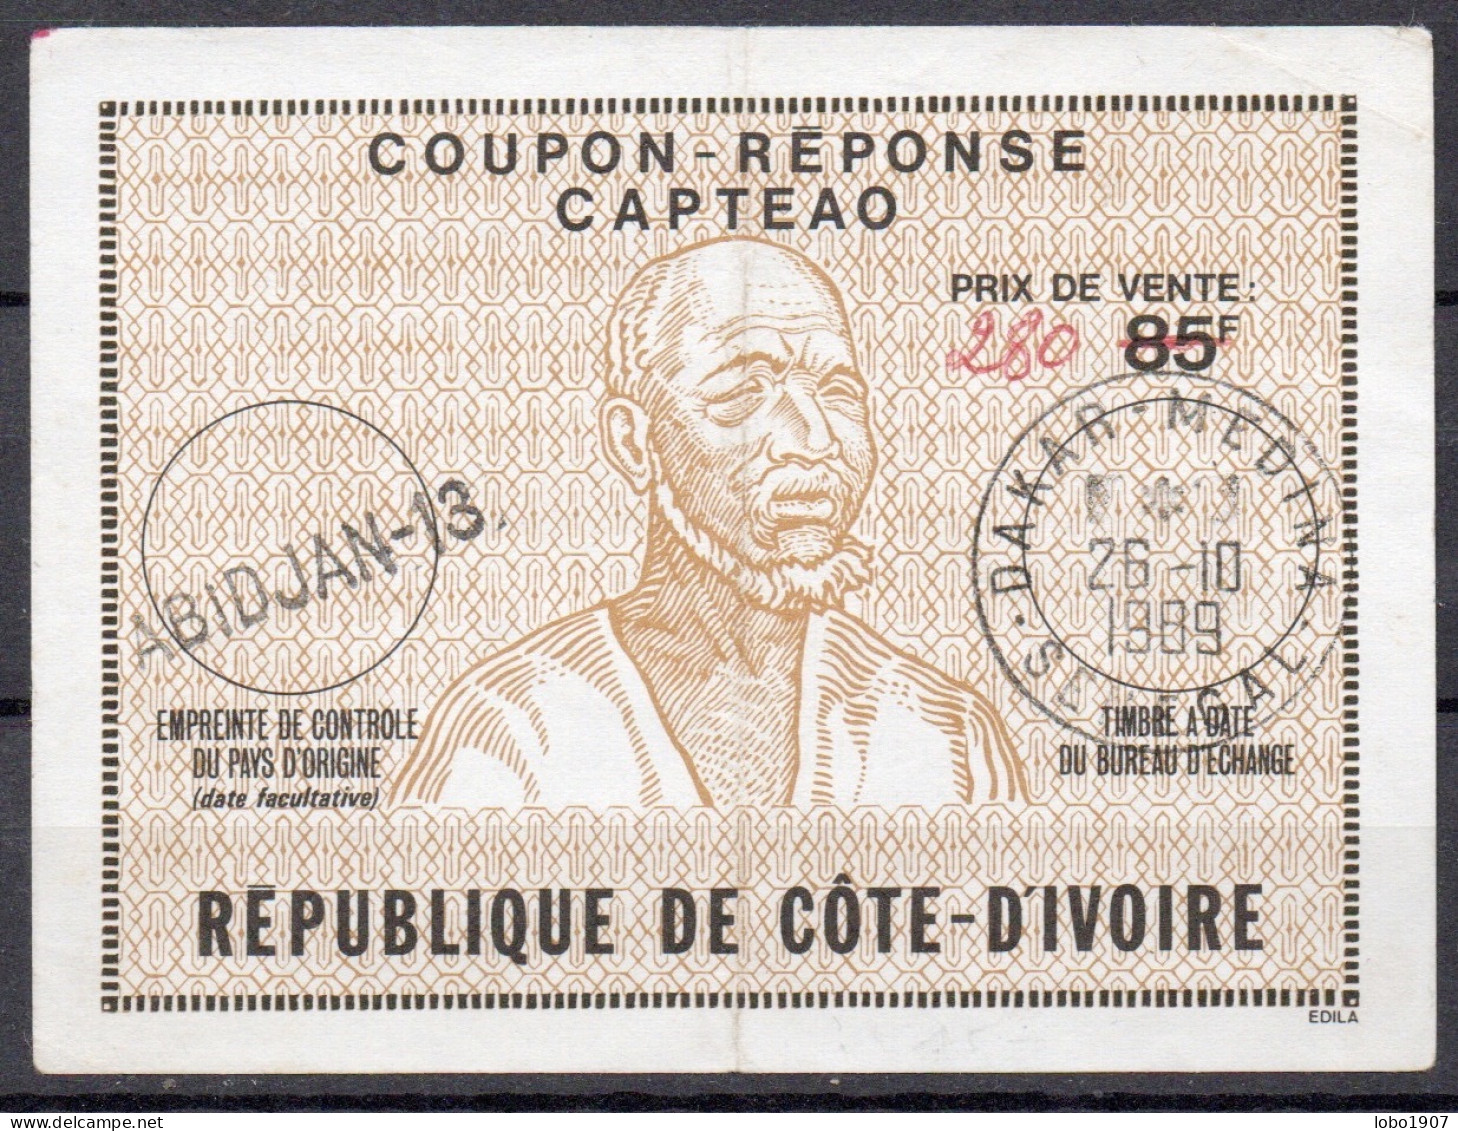 RÉPUBLIQUE DE CÔTE D'IVOIRE  Ca1  280 / 85F  CAPTEAO Reply Coupon Reponse Antwortschein IRC IAS O ABIDJAN 13  Redeemed - Ivory Coast (1960-...)